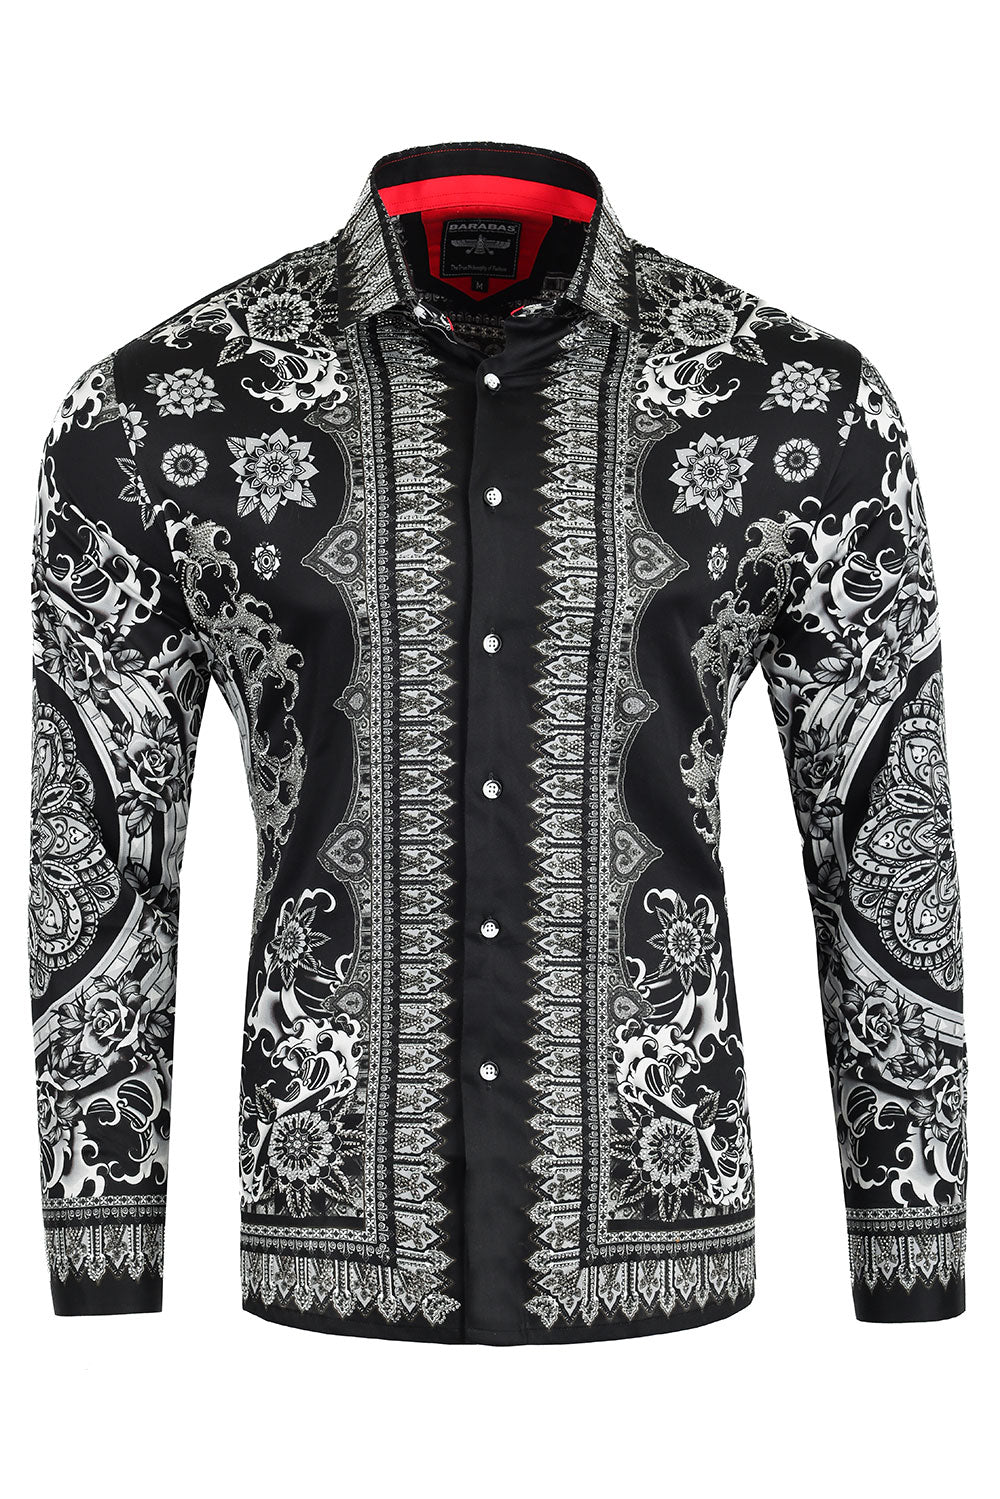 BARABAS Men's Rhinestone Floral Print Baroque Long Sleeve Shirts 3SPR413 Black